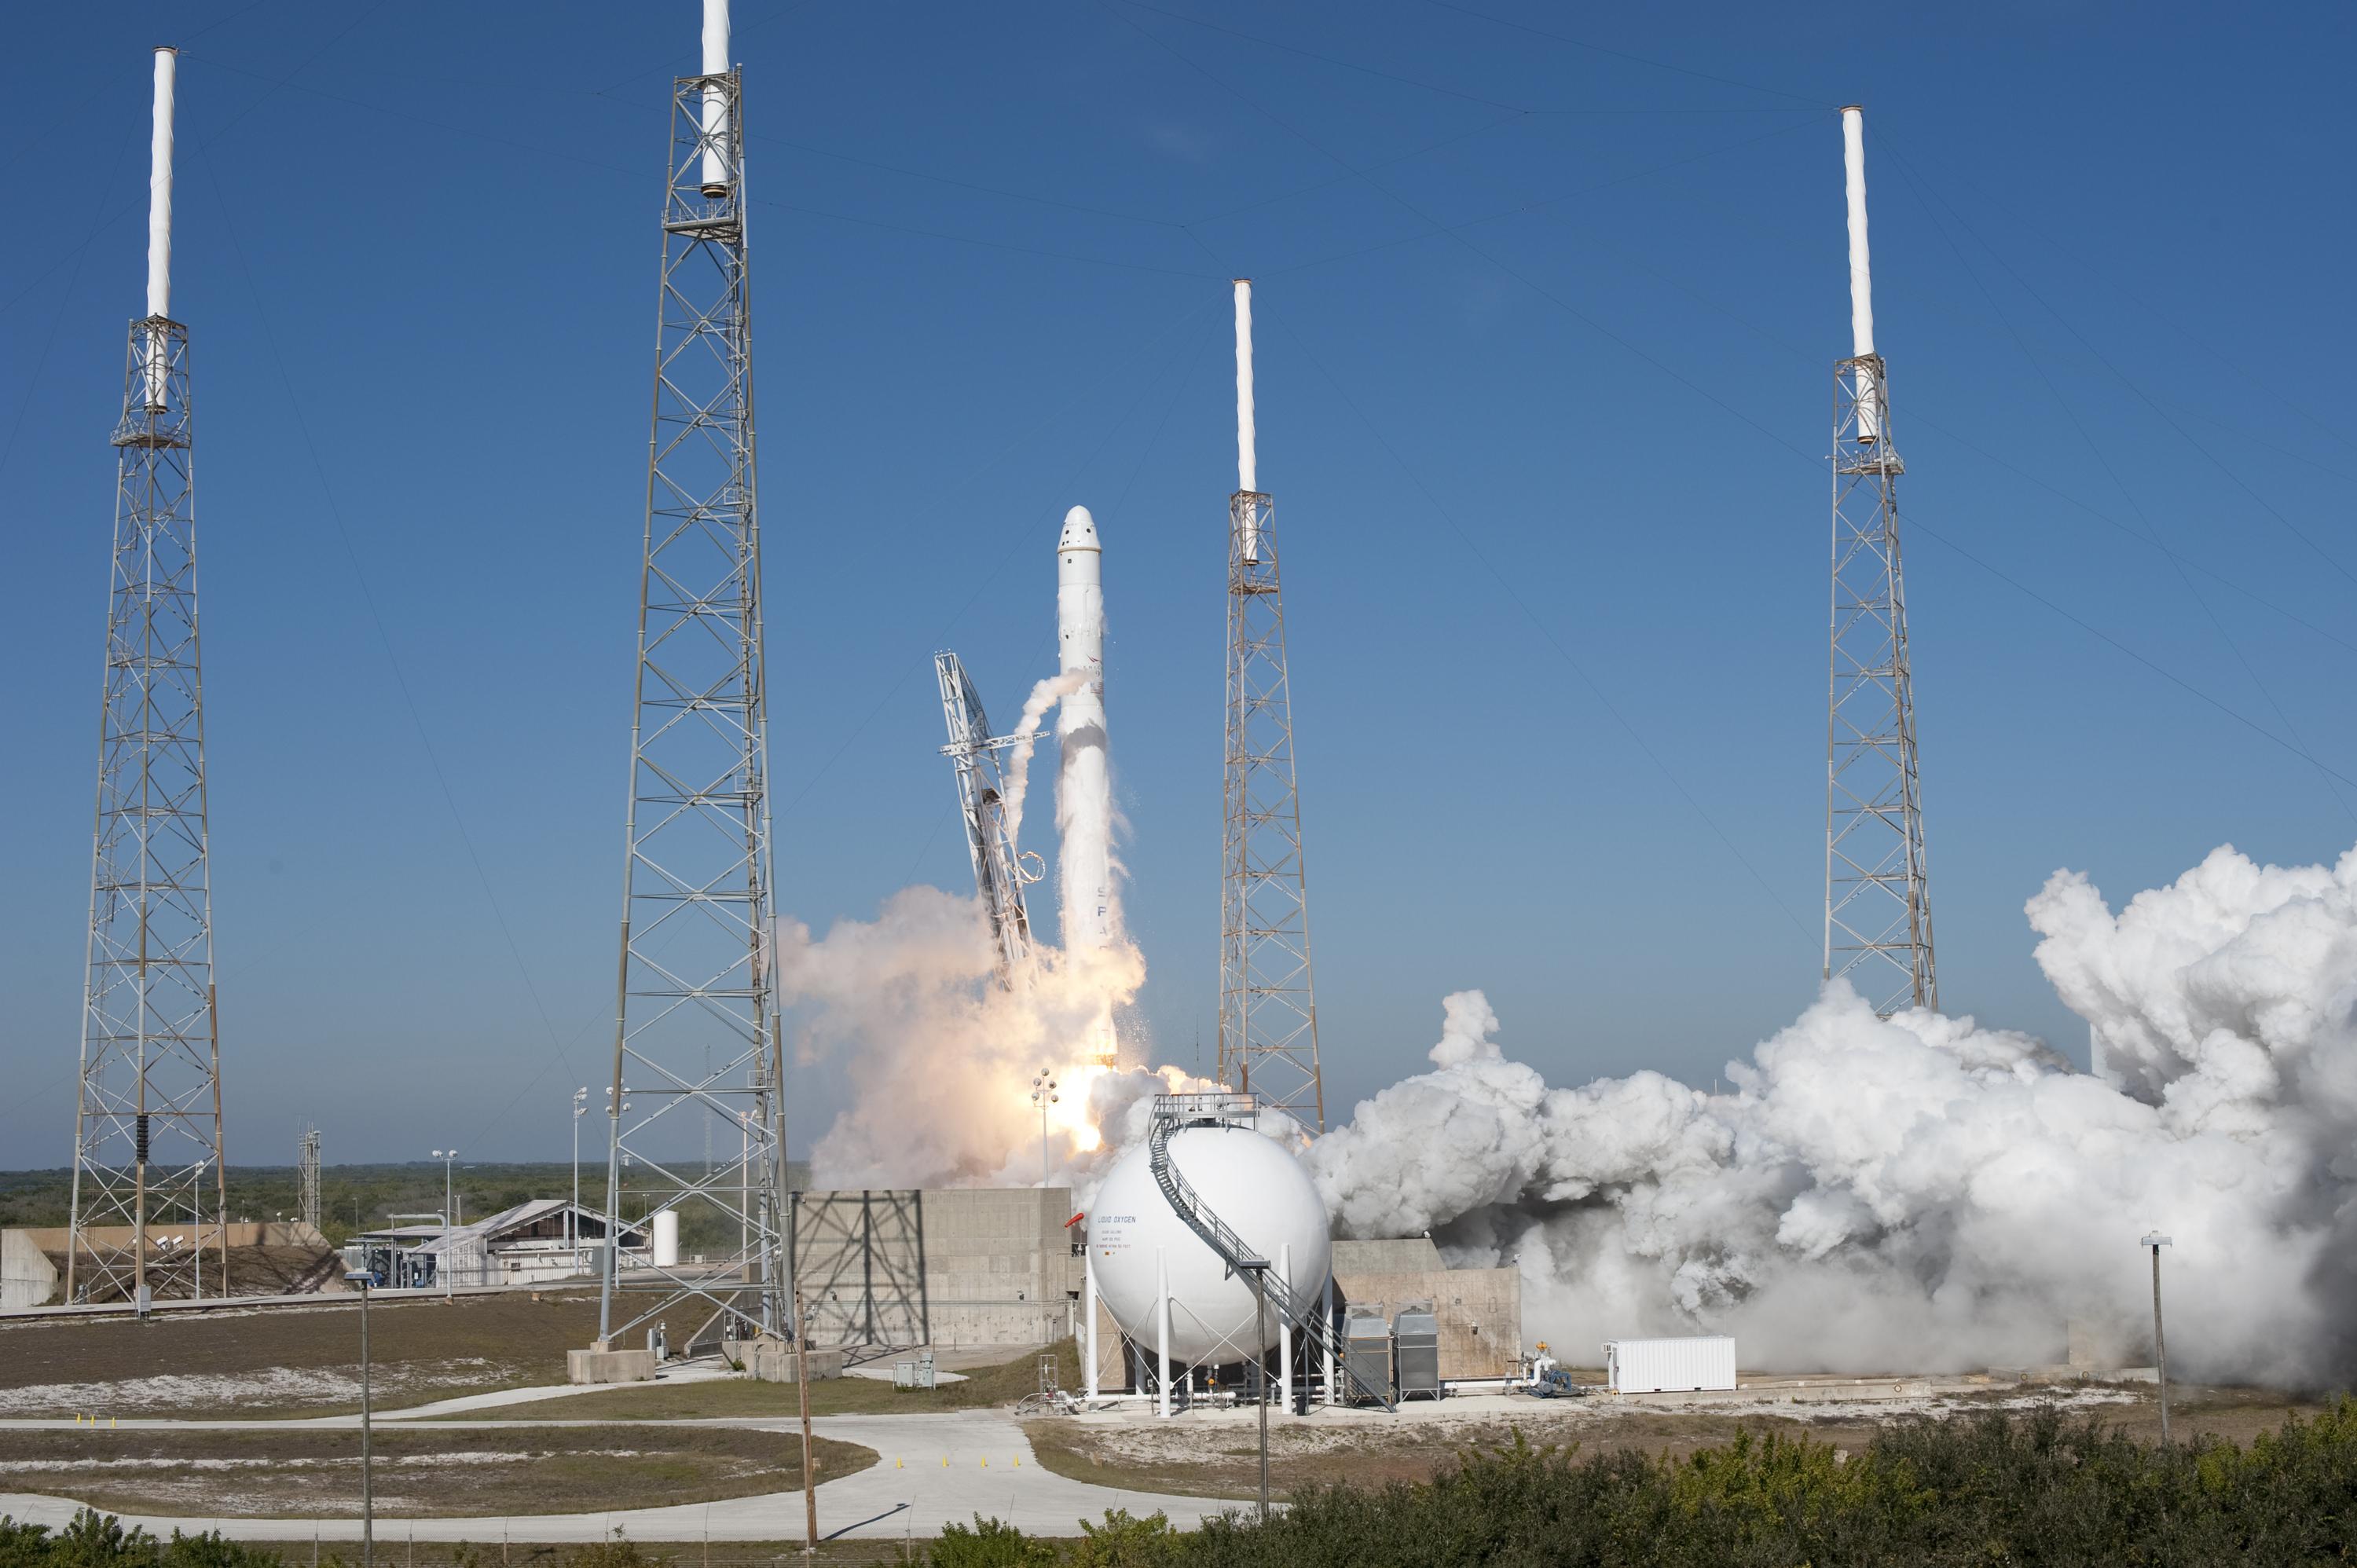 Description Spacex S Falcon Rocket Dragon Spacecraft Lift Off